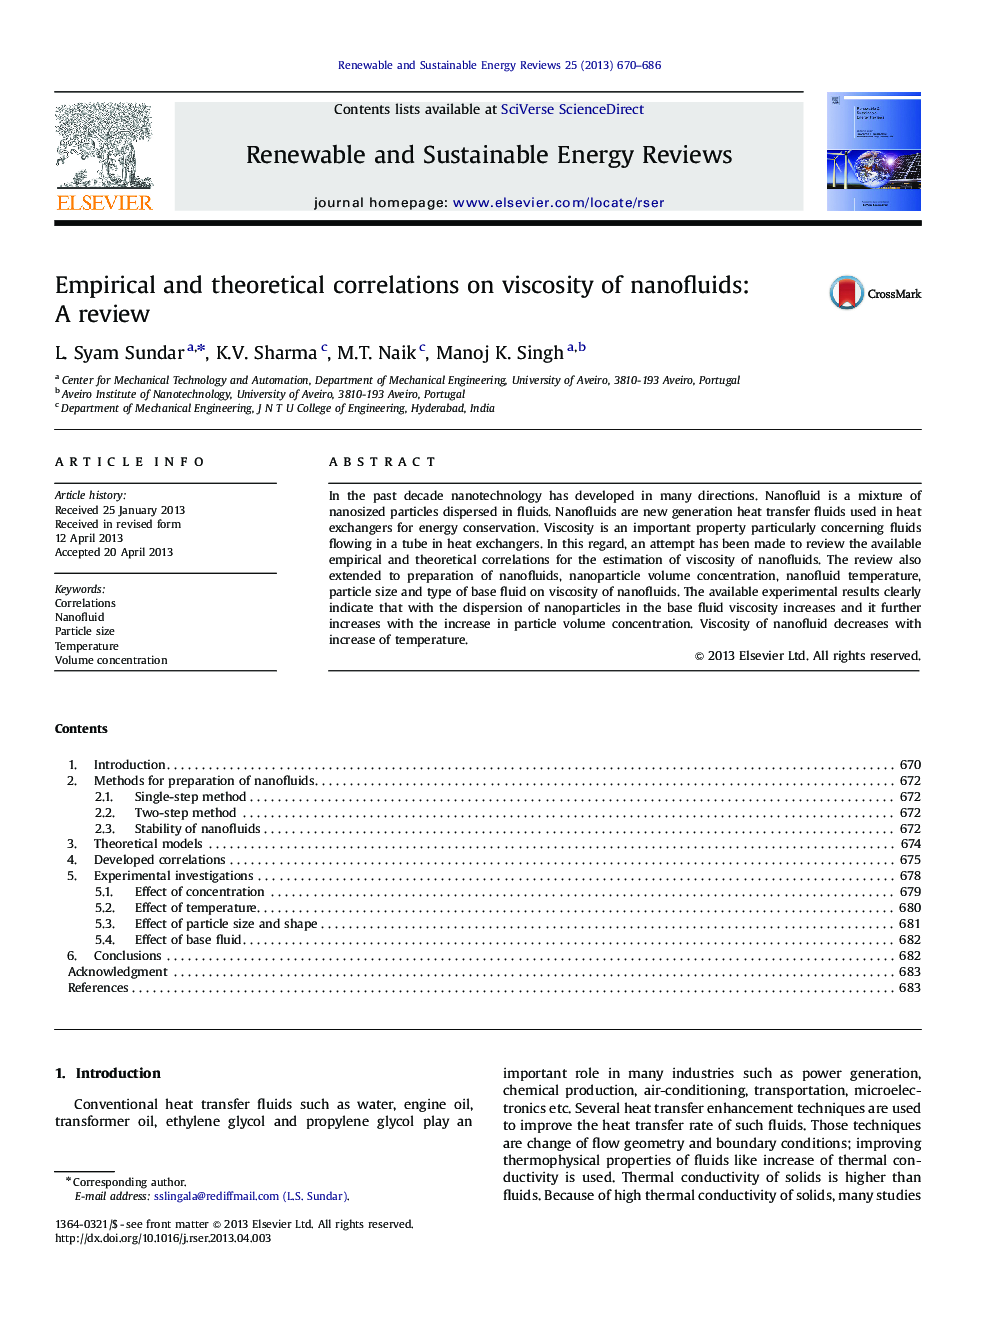 Empirical and theoretical correlations on viscosity of nanofluids: A review